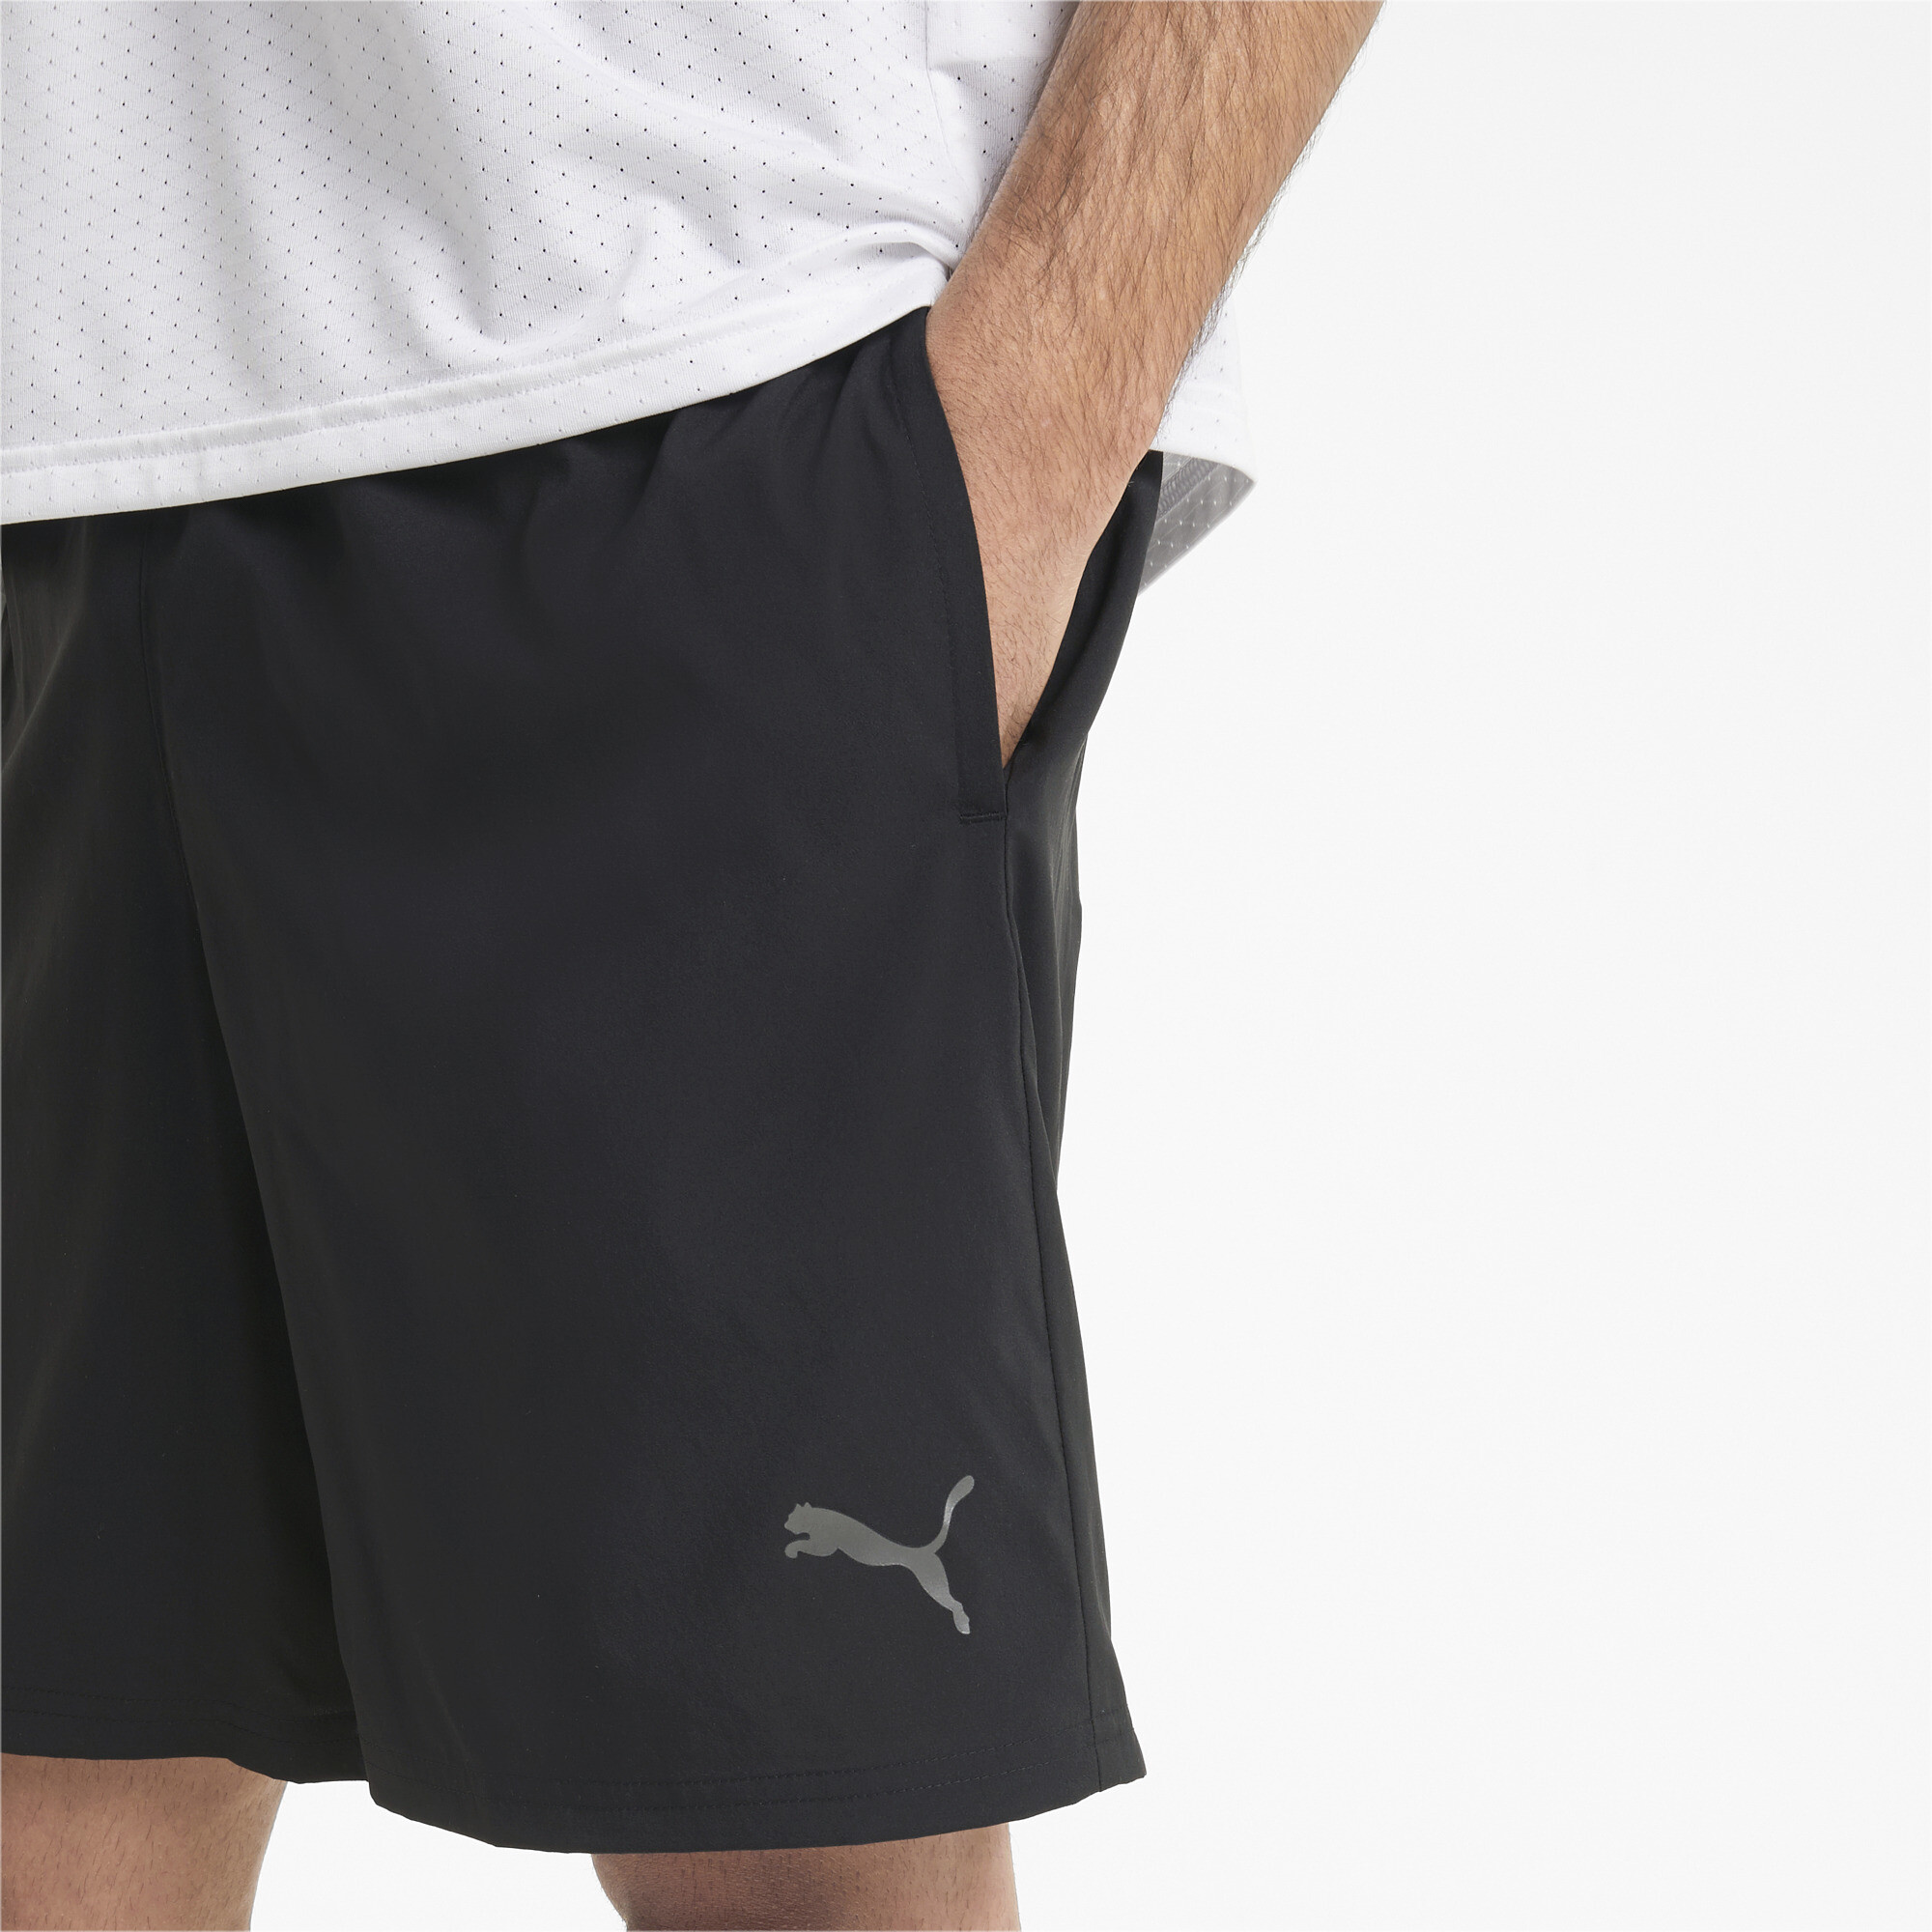 Men's Puma Favourite Blaster 7's Training Shorts, Black, Size S, Clothing